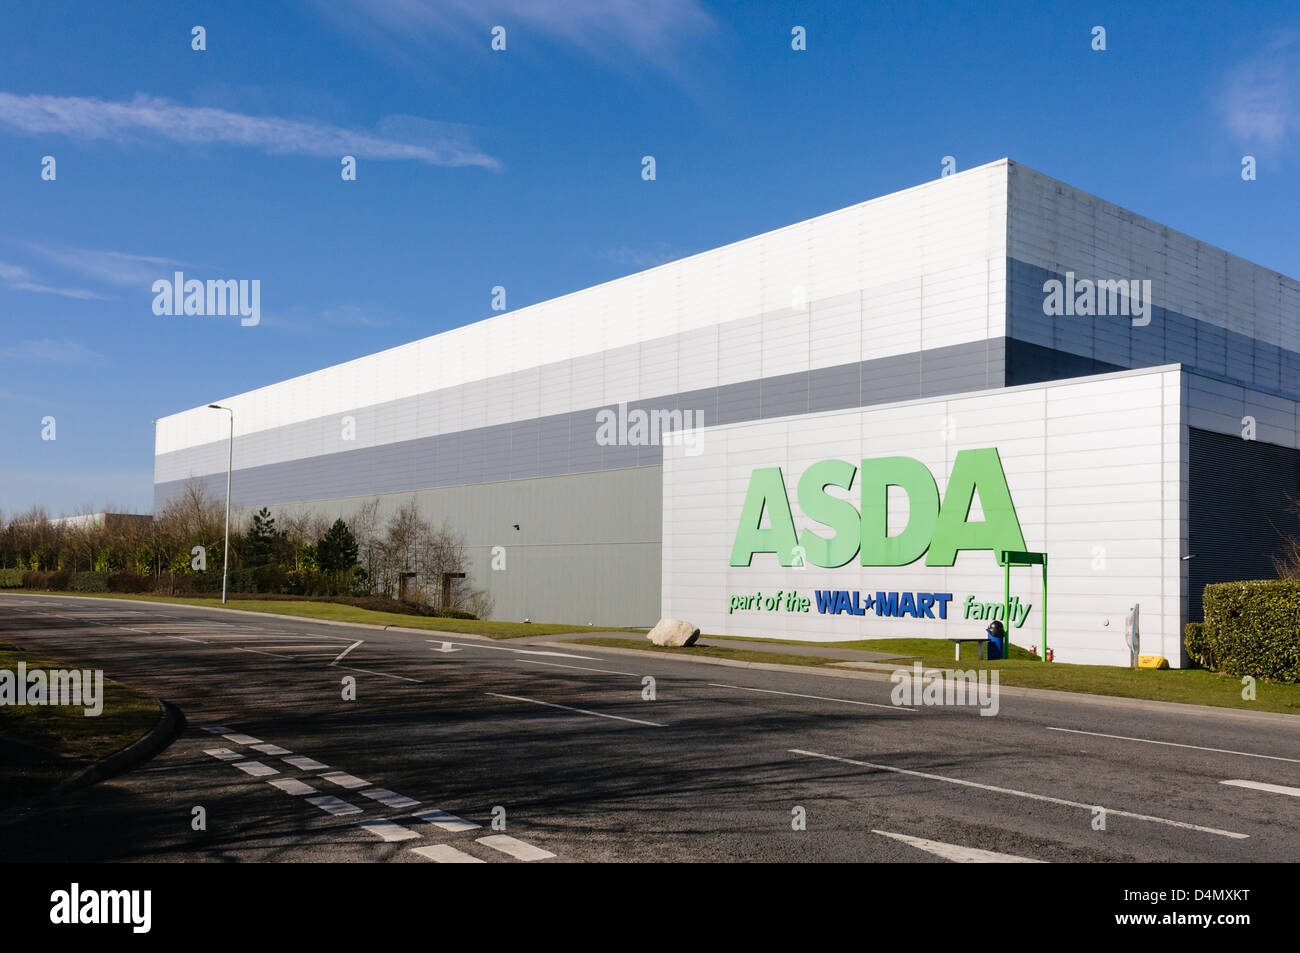 c2014 Walmart Photo 6x4 Distribution centre Forthclyde Way Grangemouth ASDA 